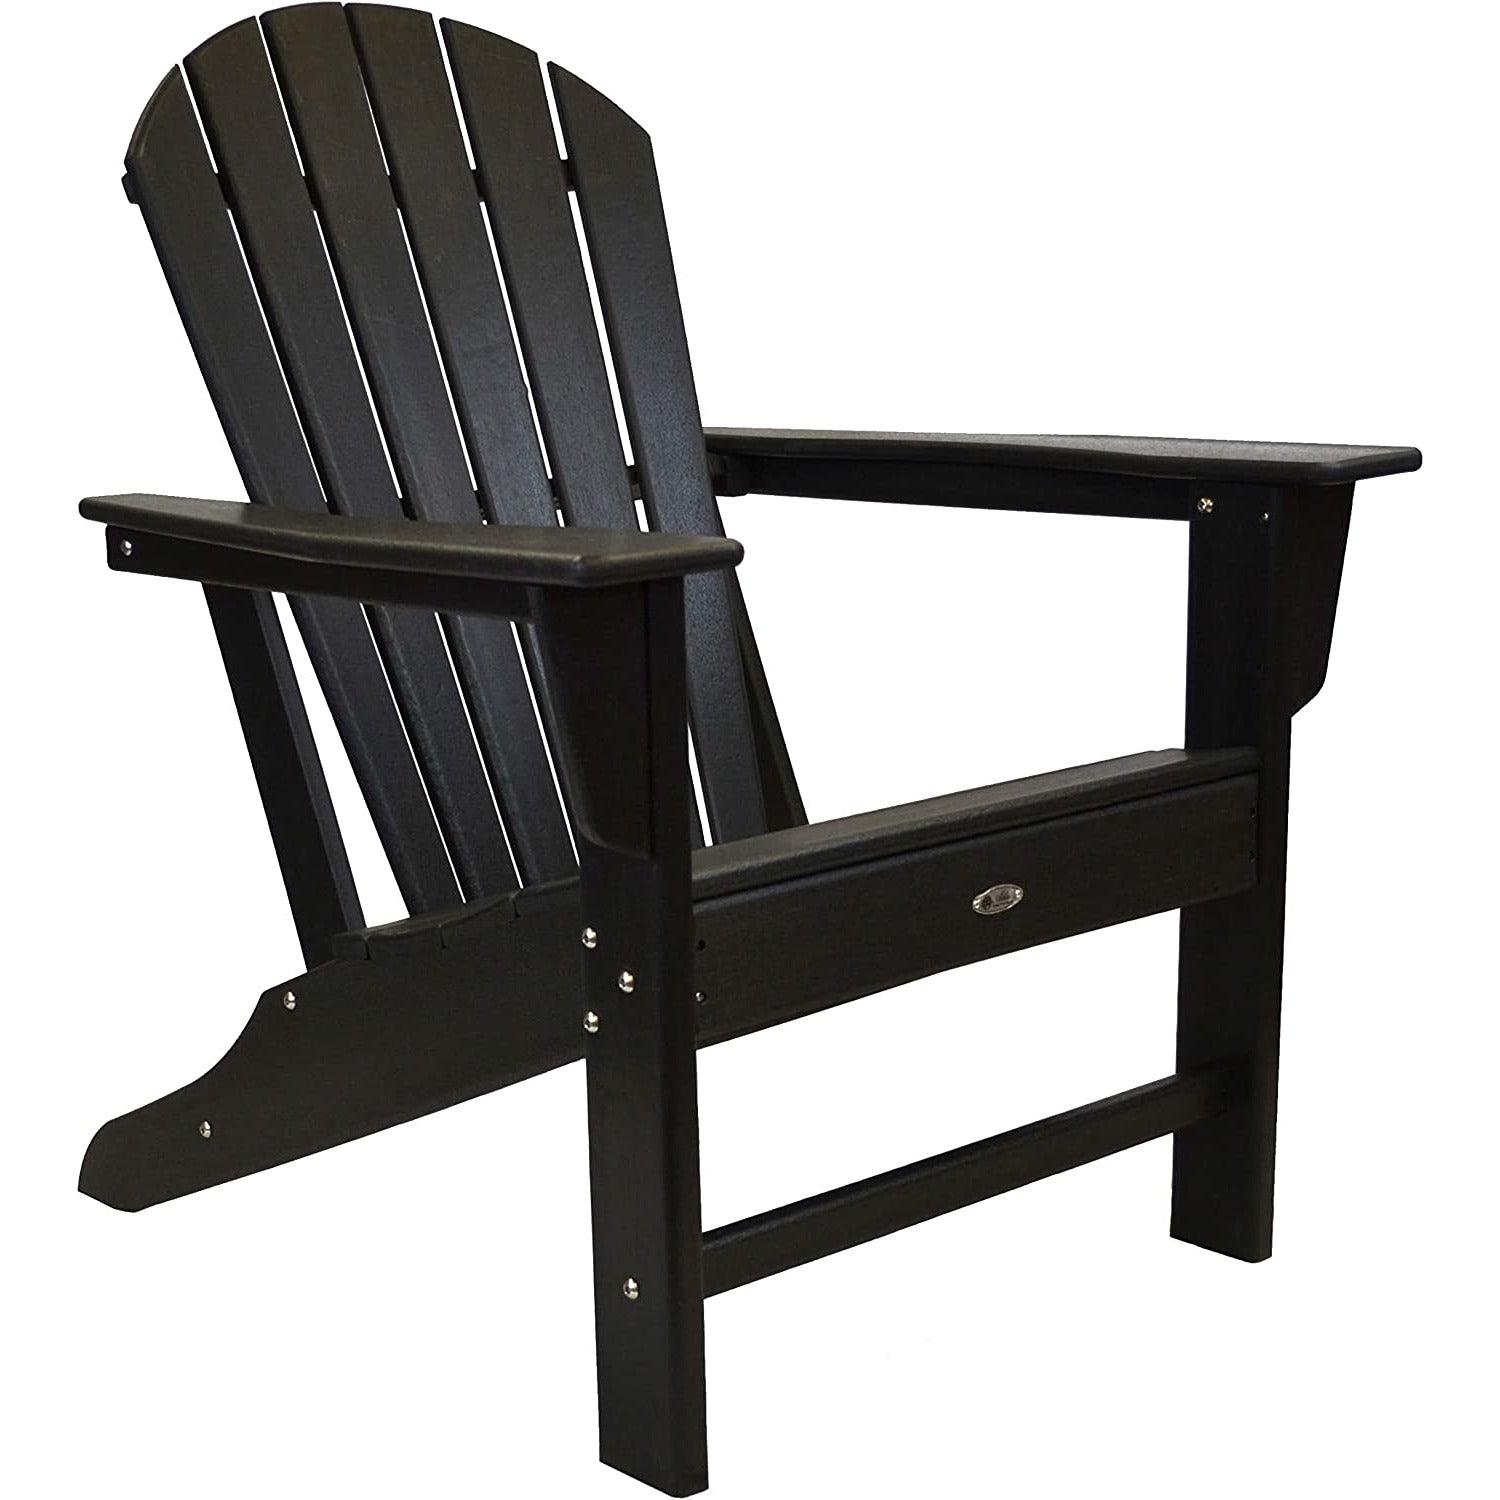 Atlas Patio Furniture Surf City Adirondack Chair IN STOCK